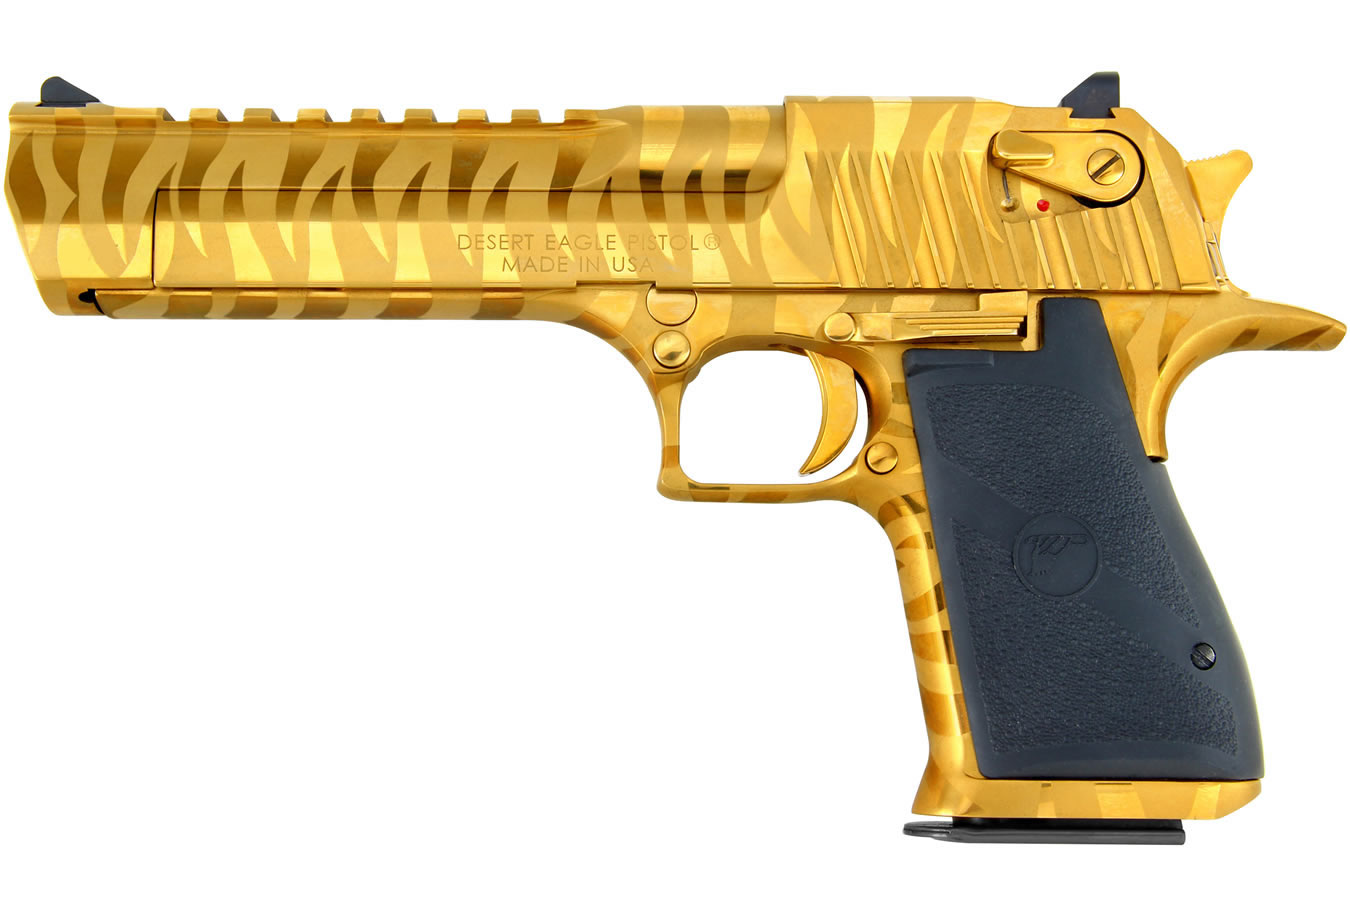 Desert Eagle 44 Mag Mark Xix Titanium Gold With Tiger Stripes